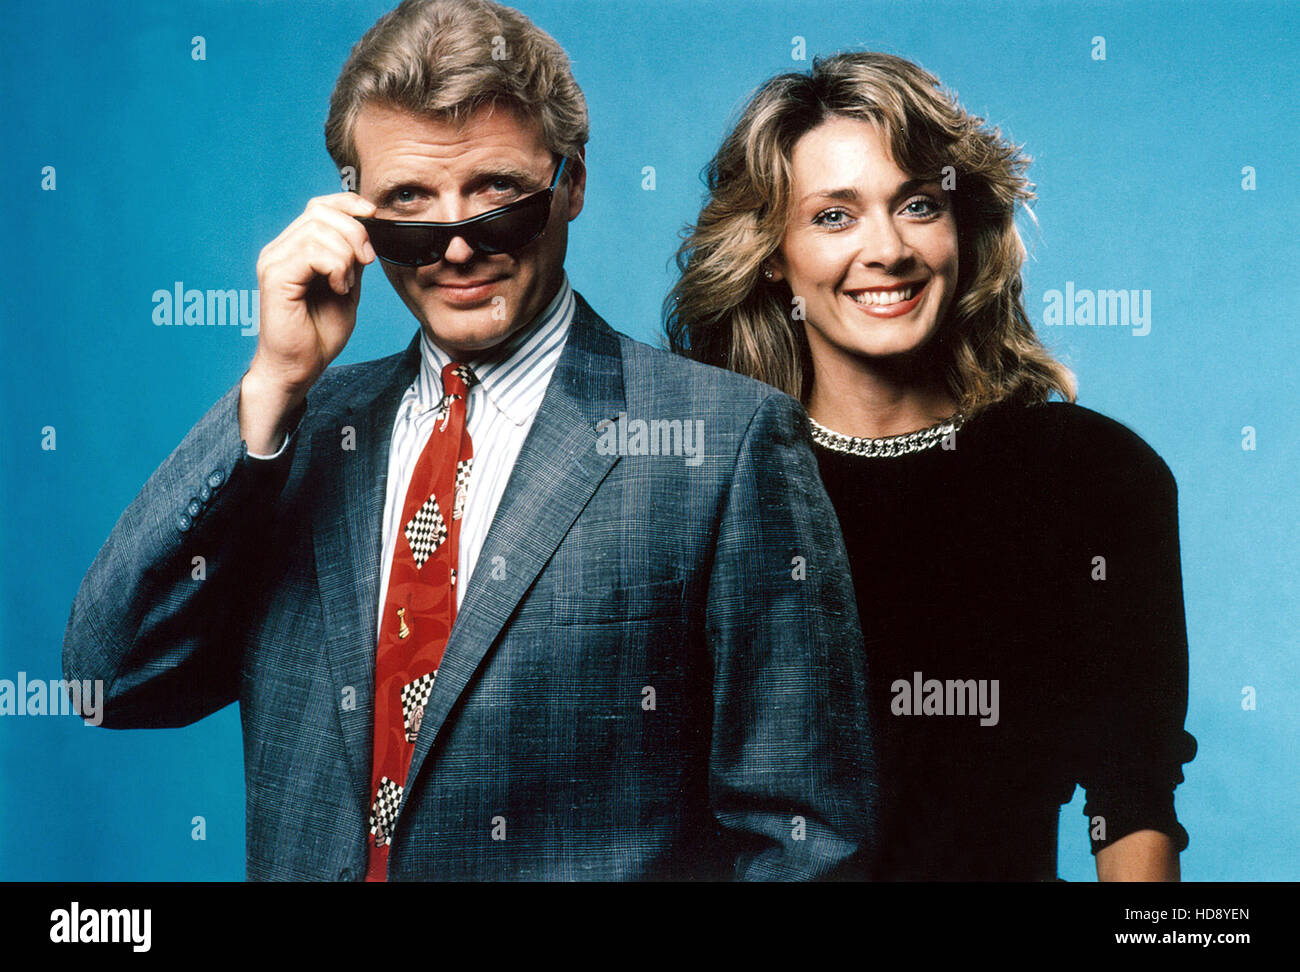 SLEDGE HAMMER, David Rasche, Anne Marie Martin, 1986-1988, (c) ABC/Courtesy  Everett Collection Stockfotografie - Alamy